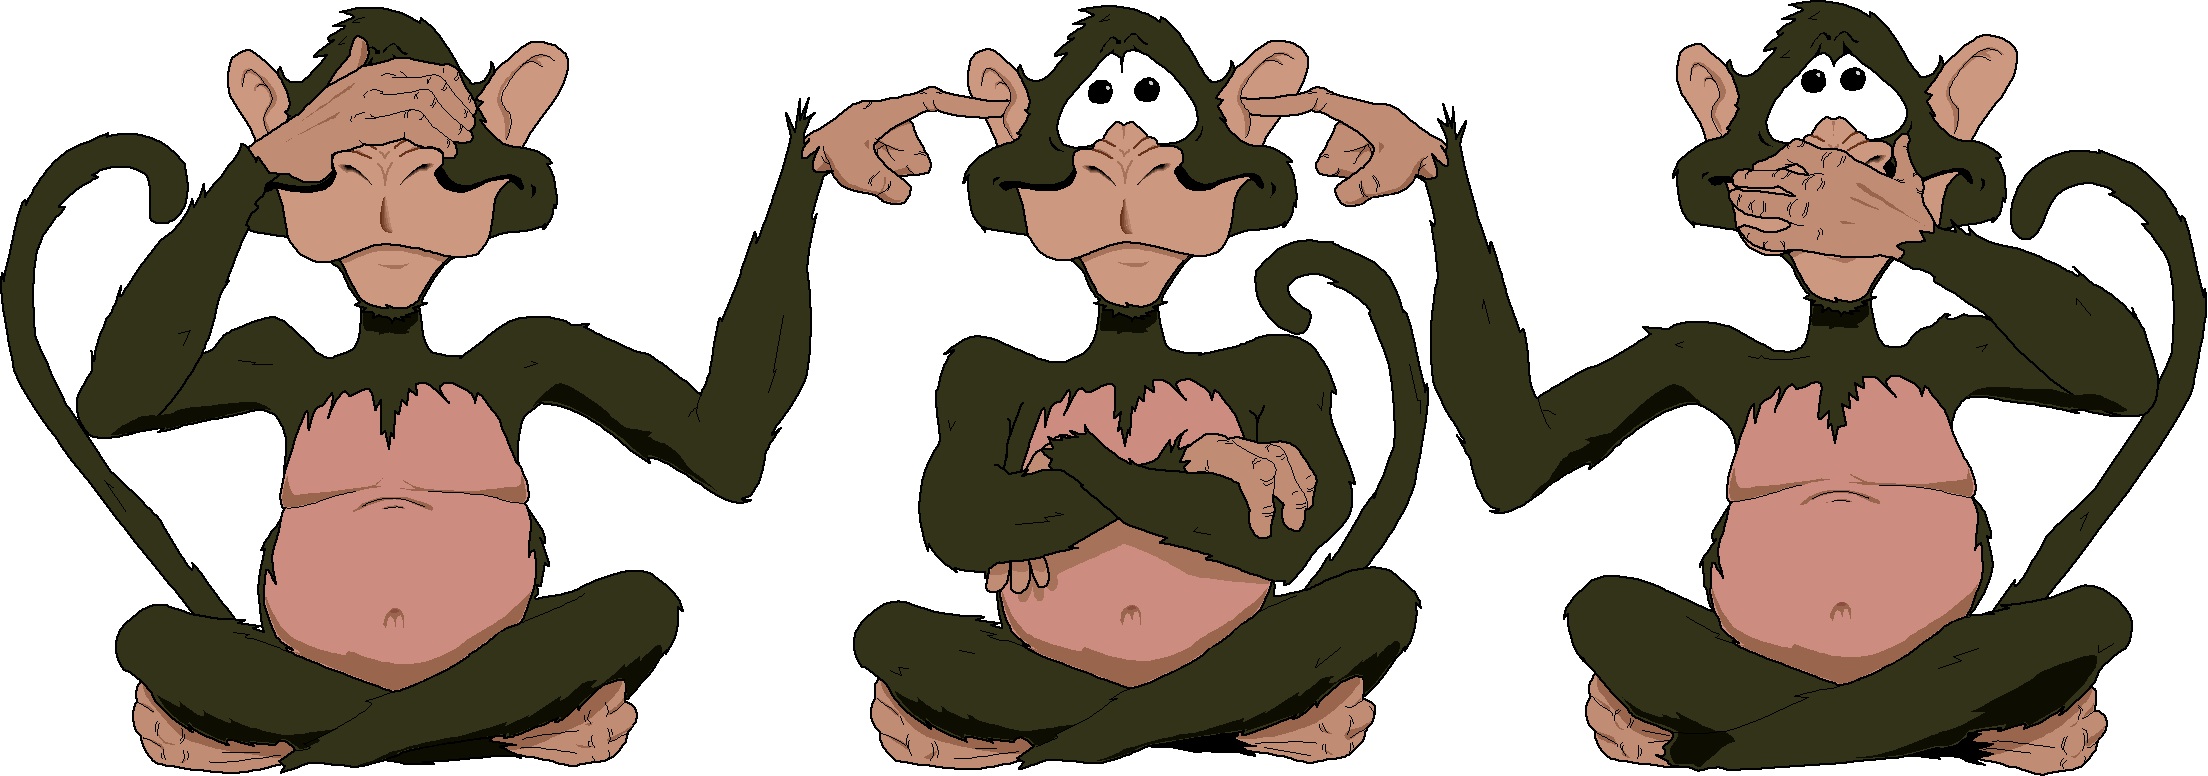 monkey-around.jpg (2208×776)